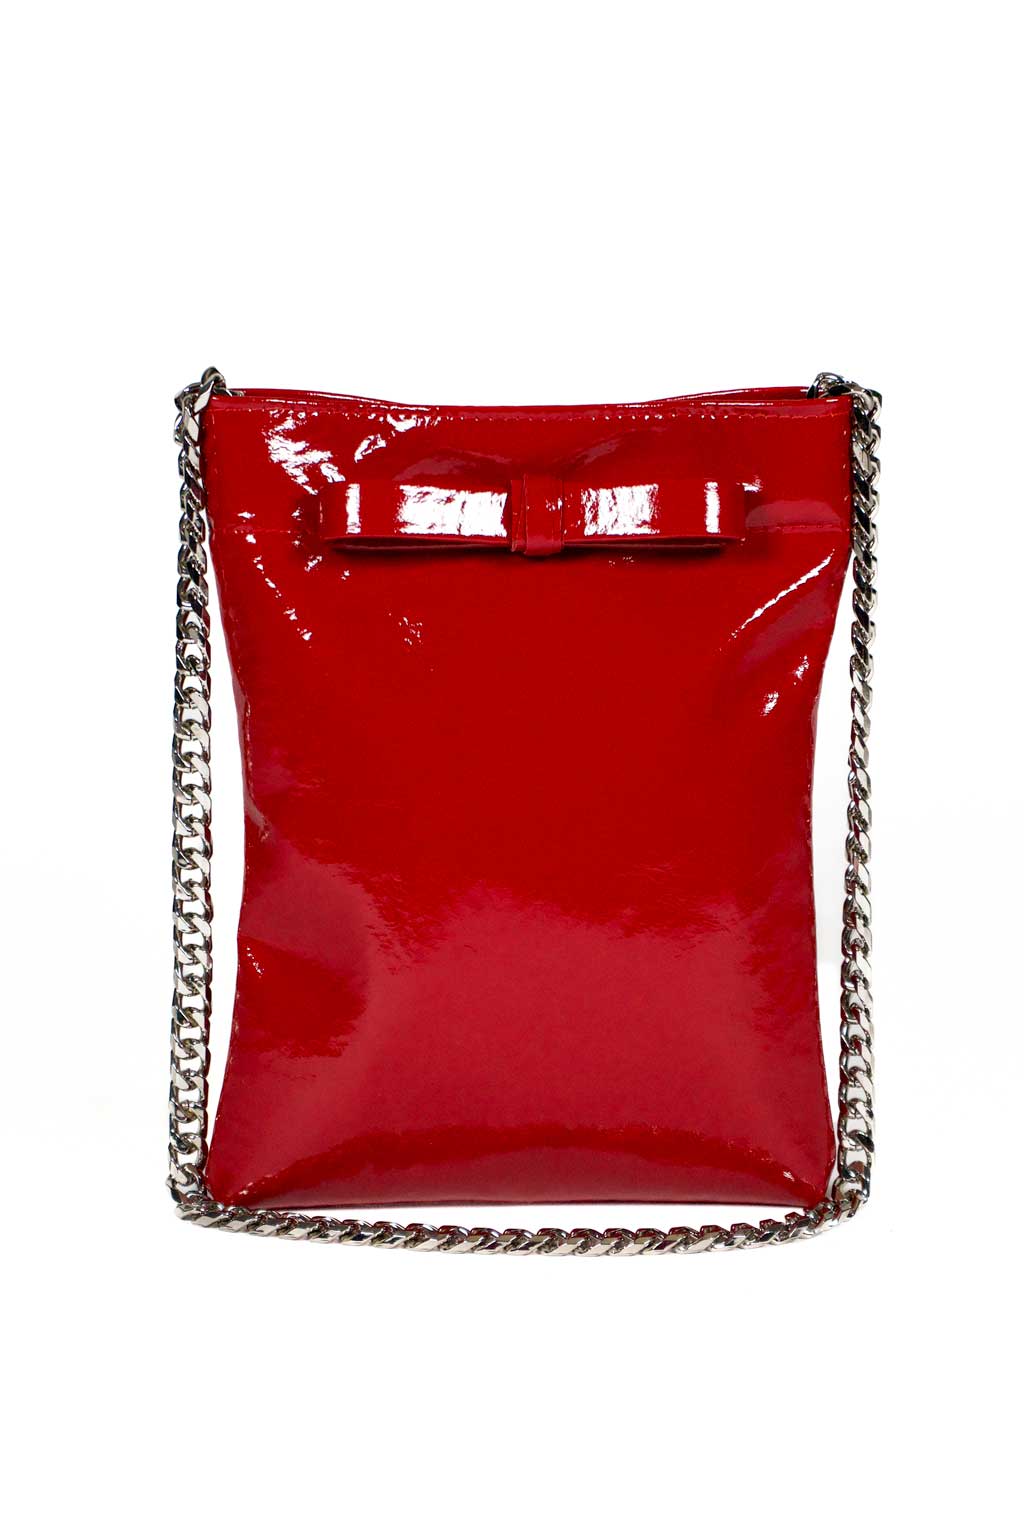 Vintage Piero Acutis Womens Purse Red Italian Patent Leather Small Bag /  Clutch | eBay